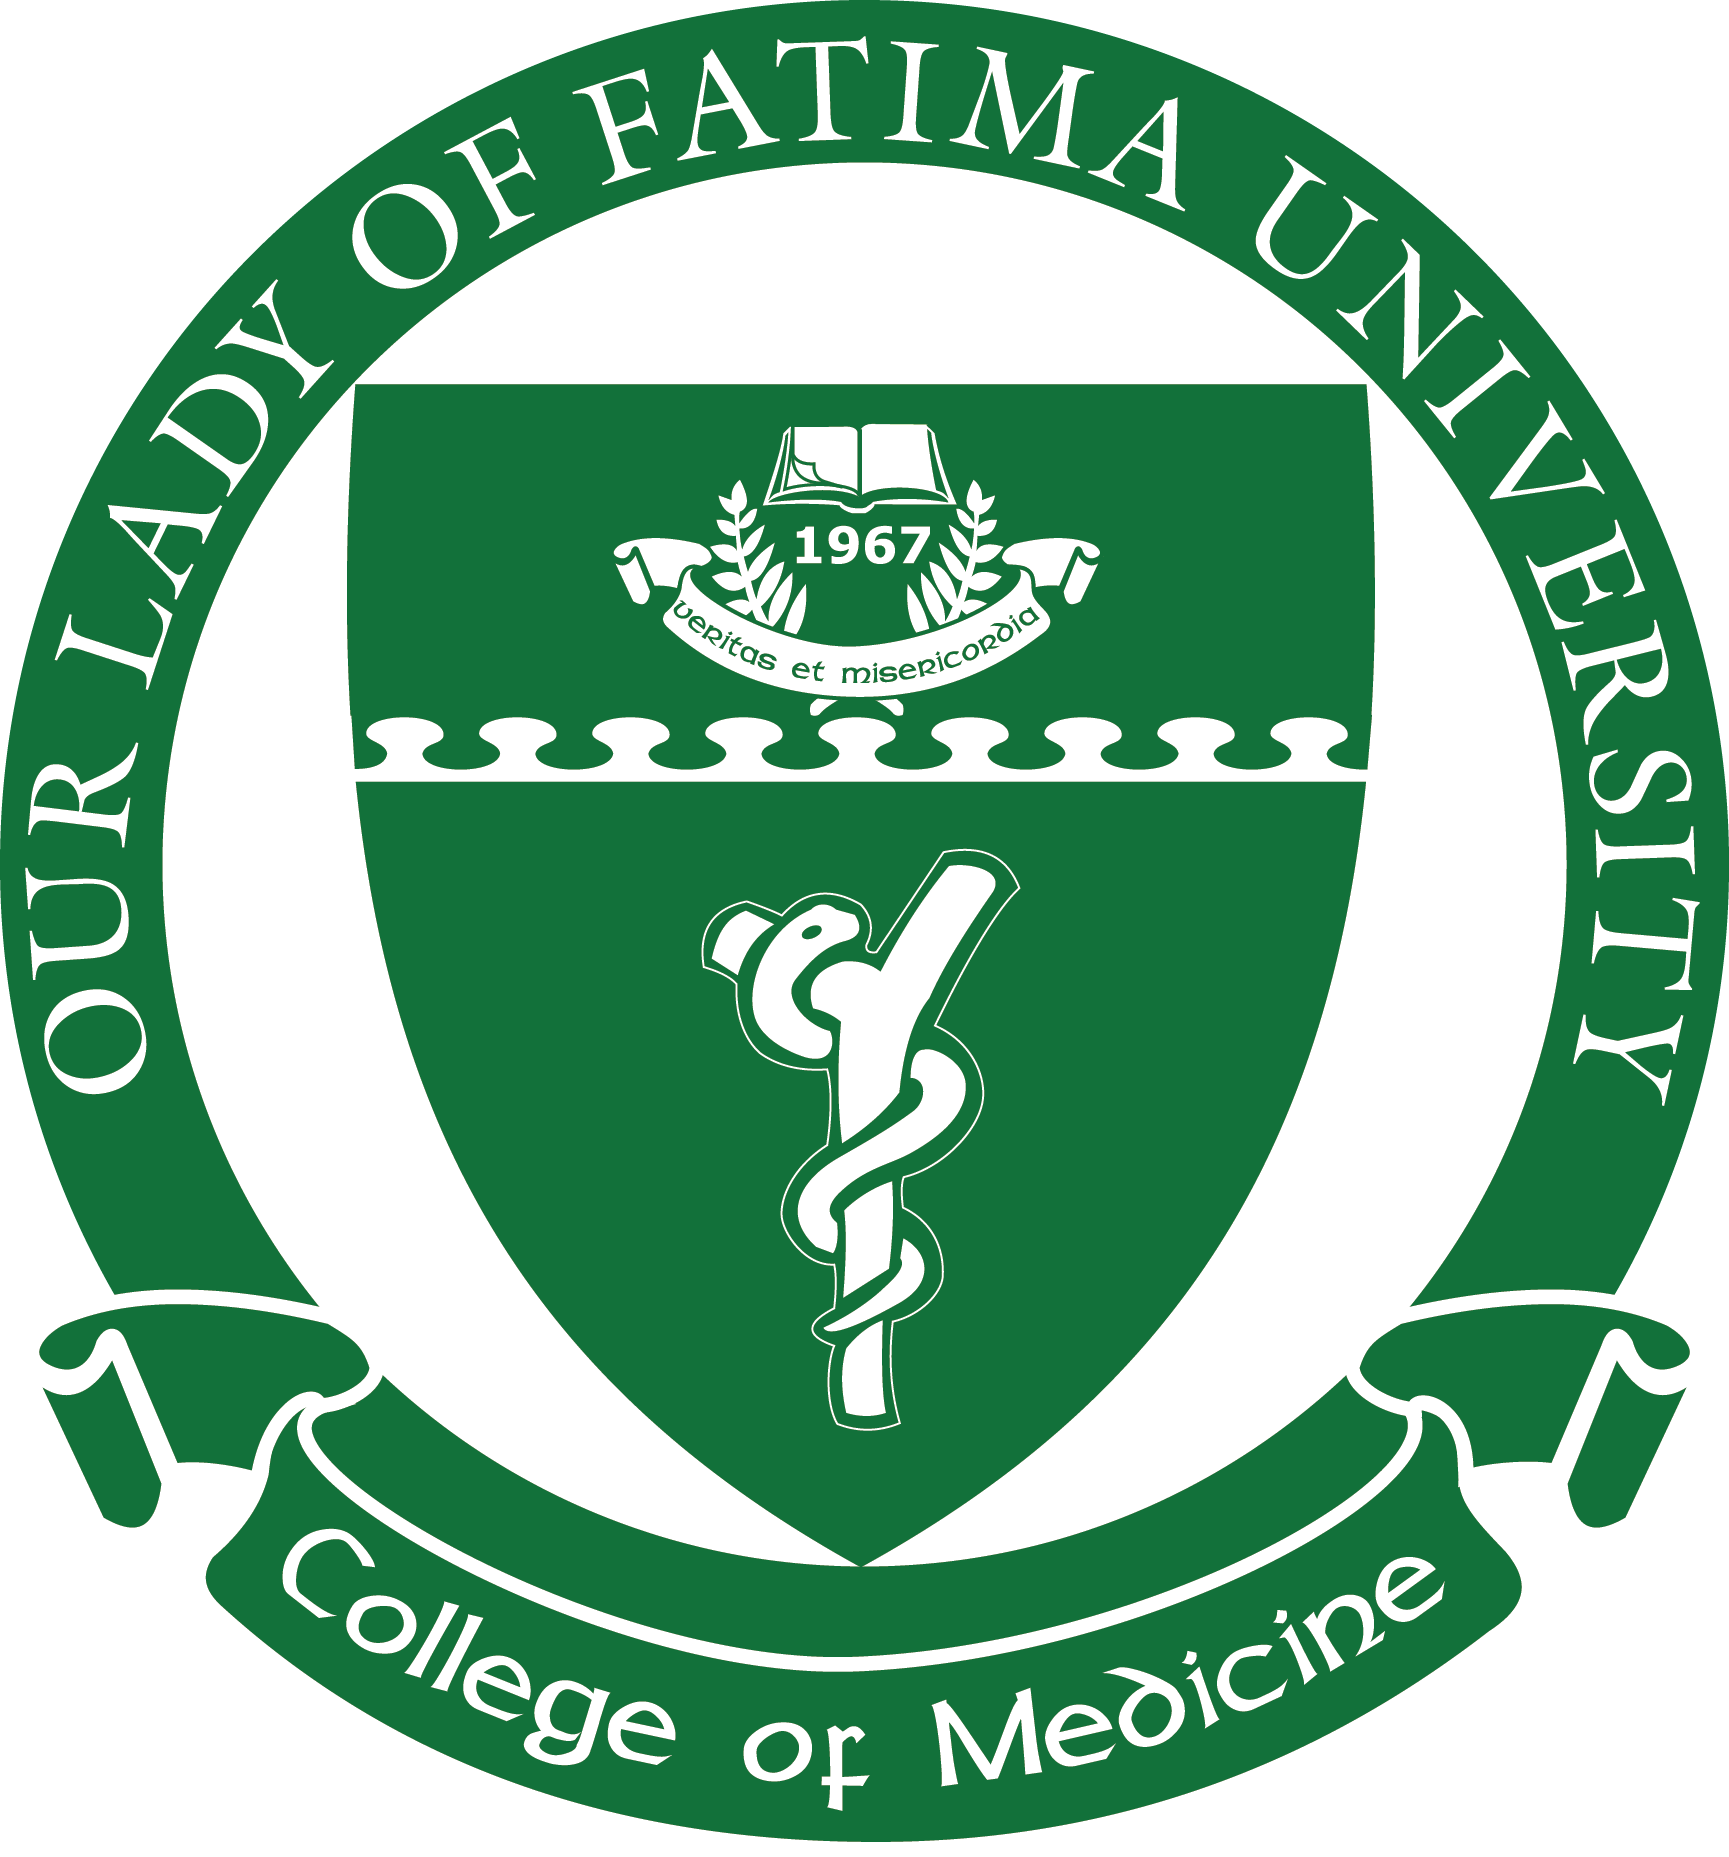 Our Lady of Fatima University | College of Medicine